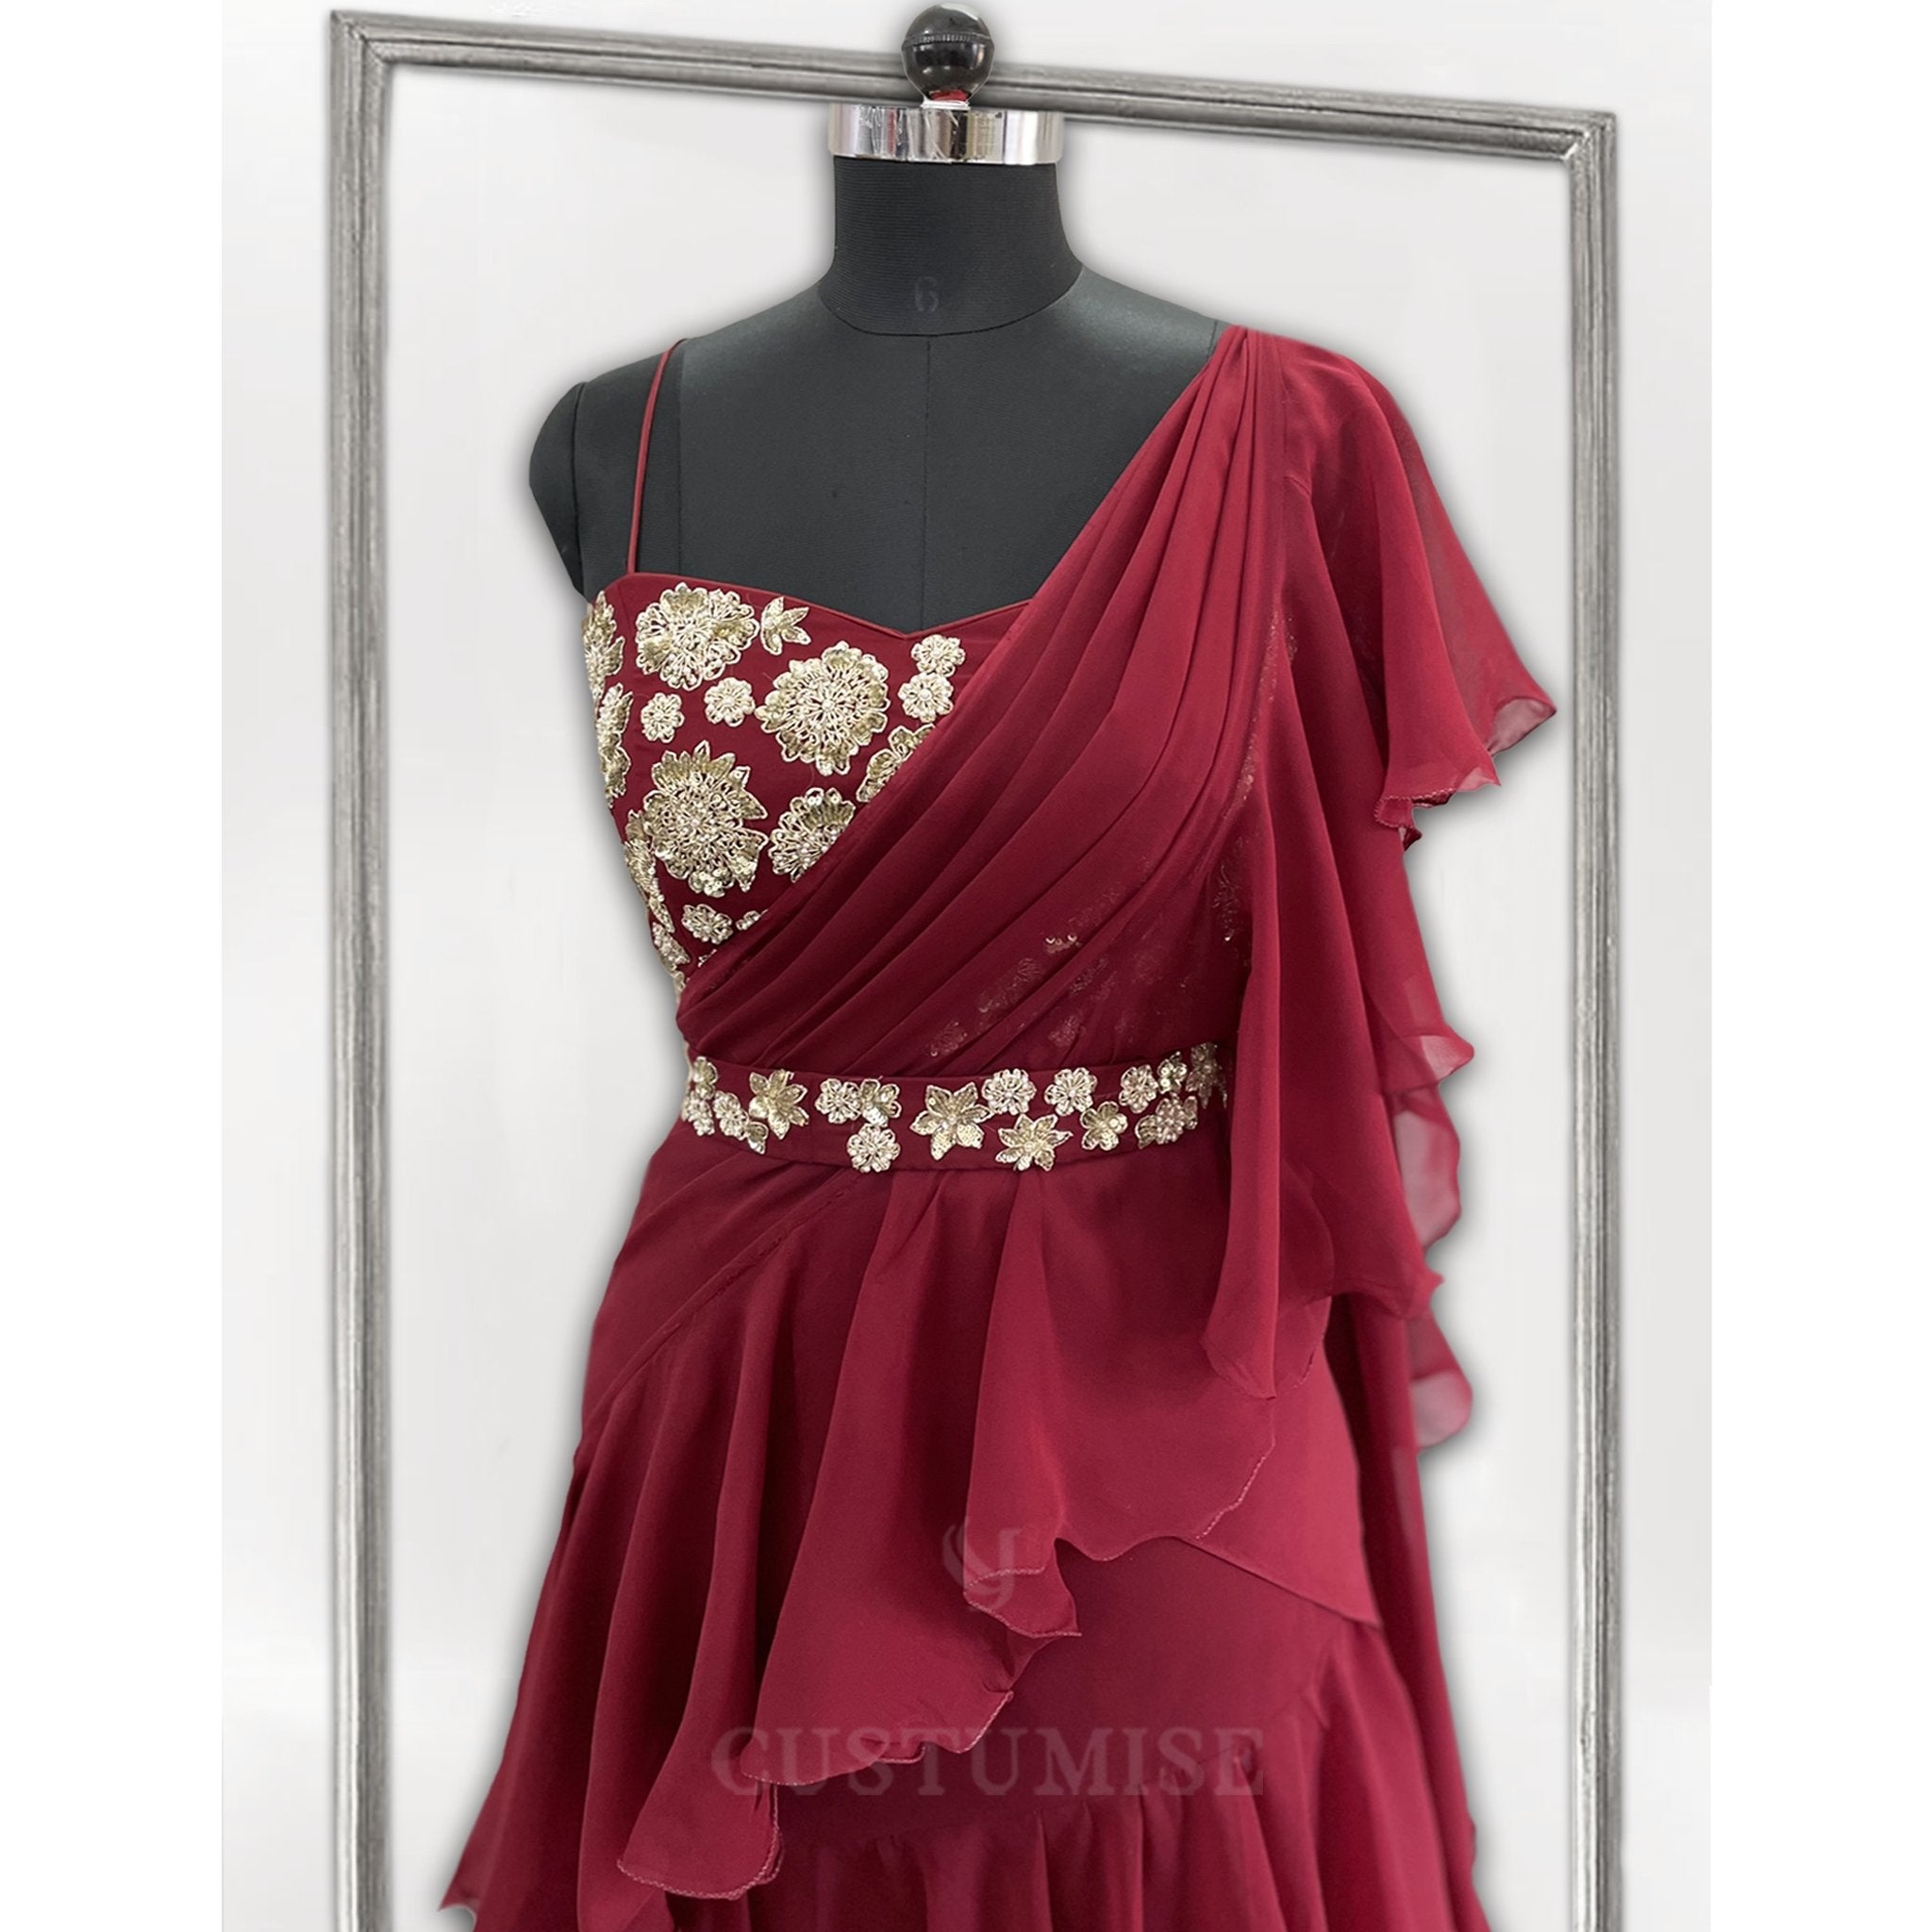 Burgundy Red Draped saree - Indian Designer Bridal Wedding Outfit